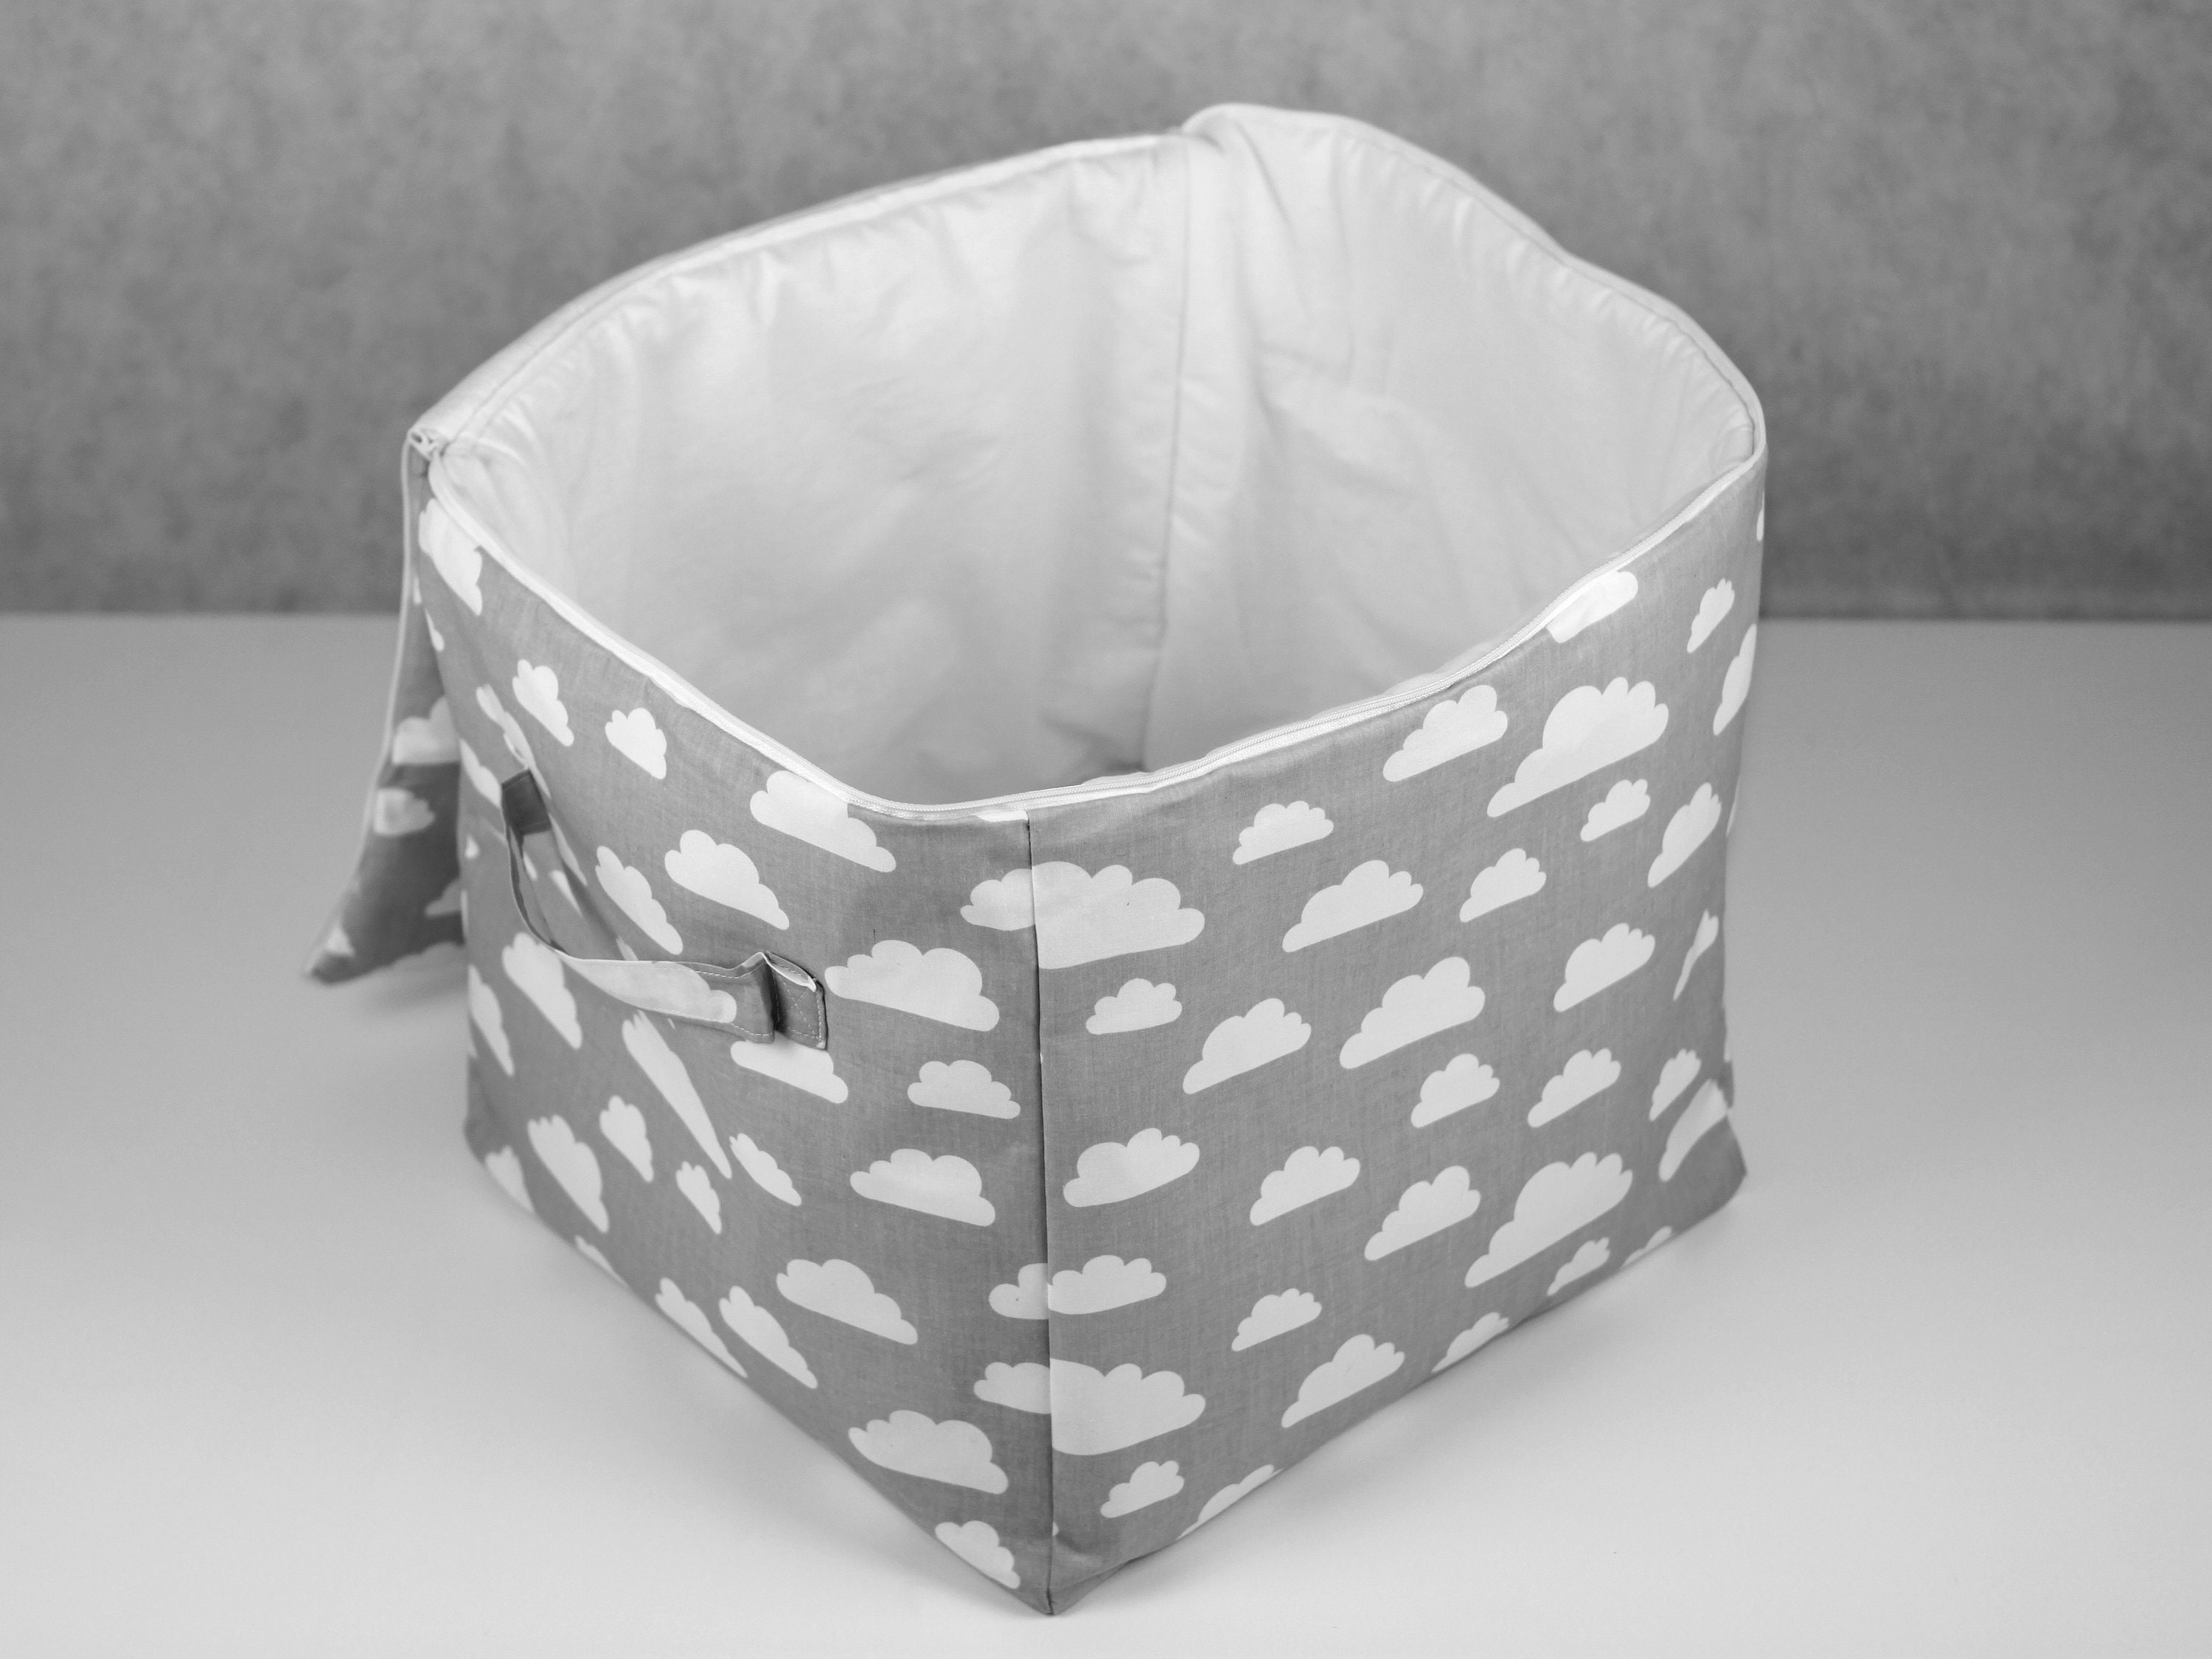 Cloud Fabric Hamper Canvas Storage Basket Laundry Hamper 